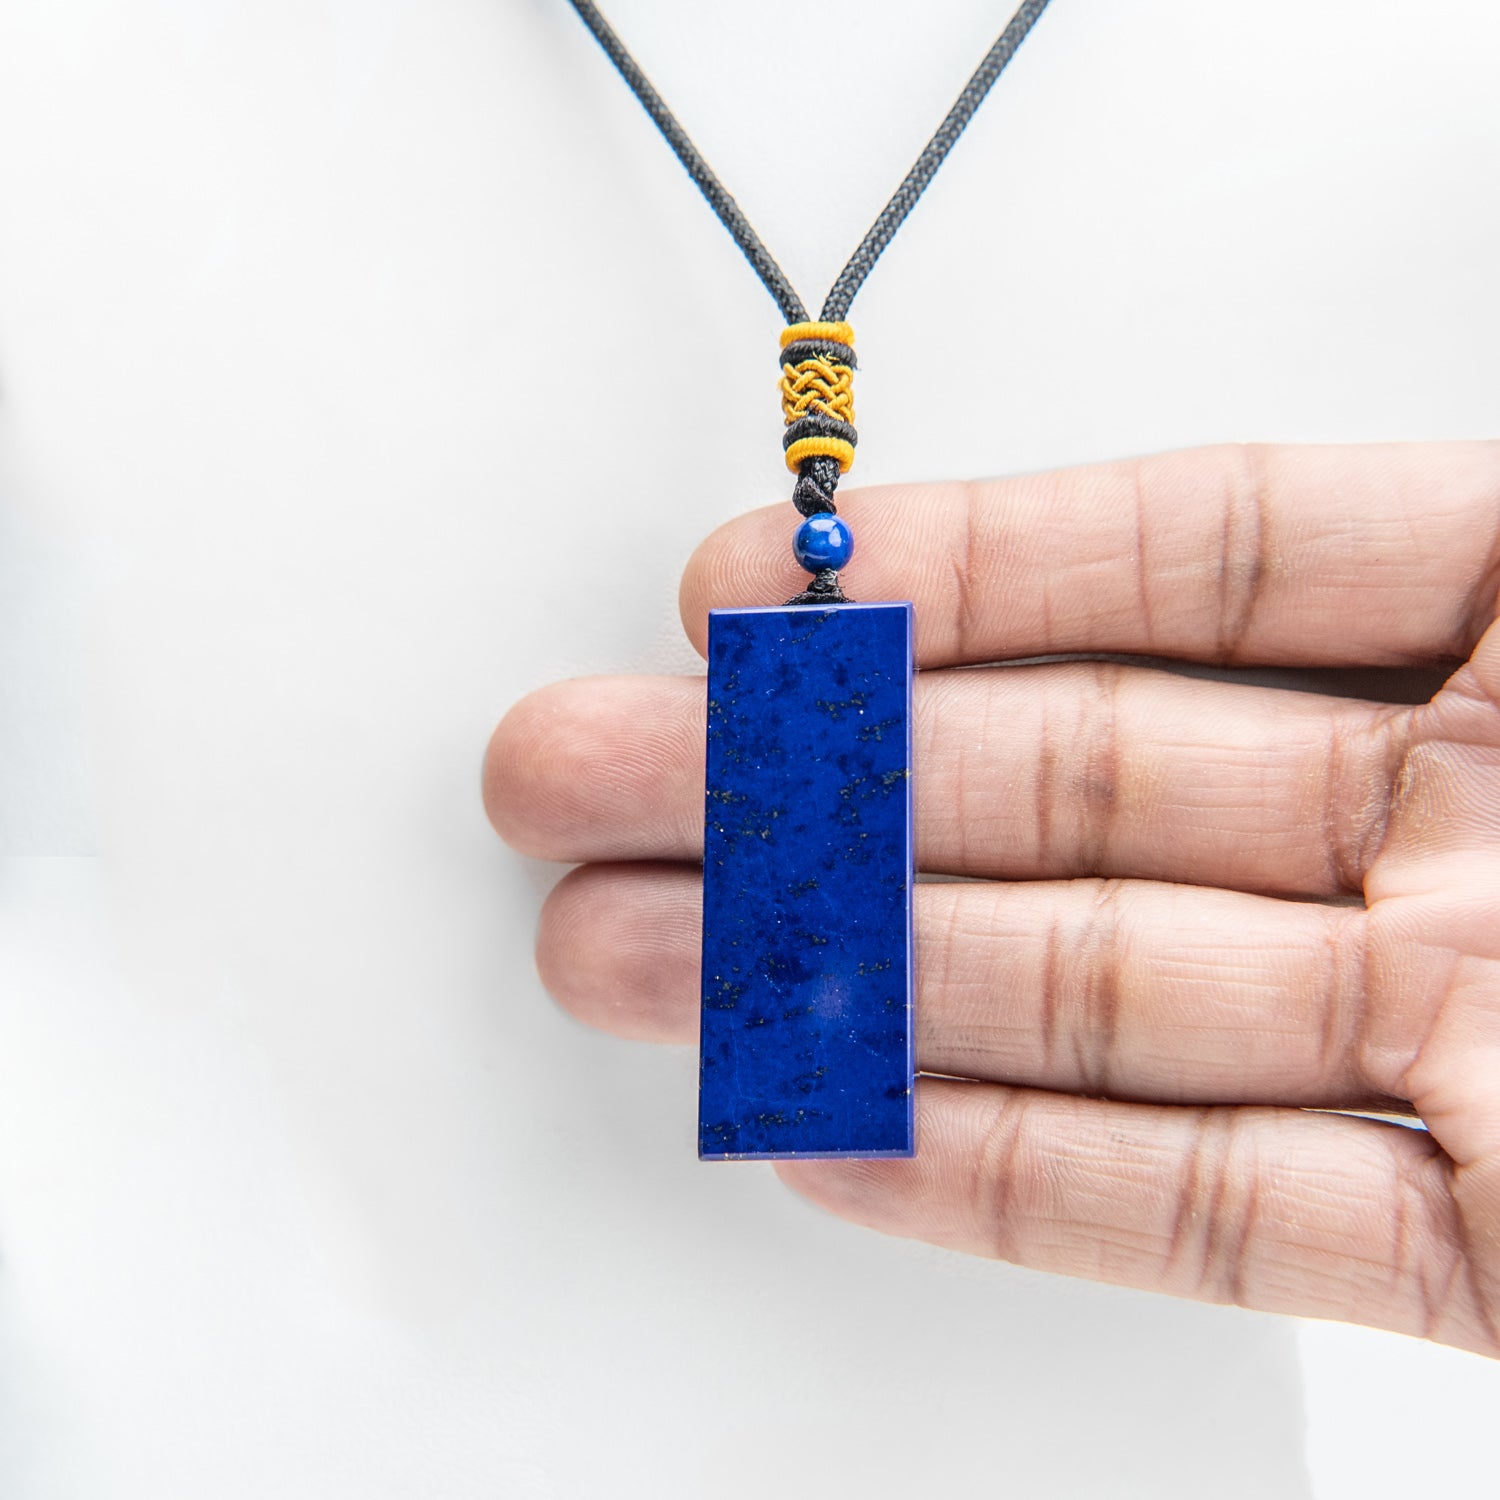 Genuine Lapis Lazuli Pendant with Black Cord